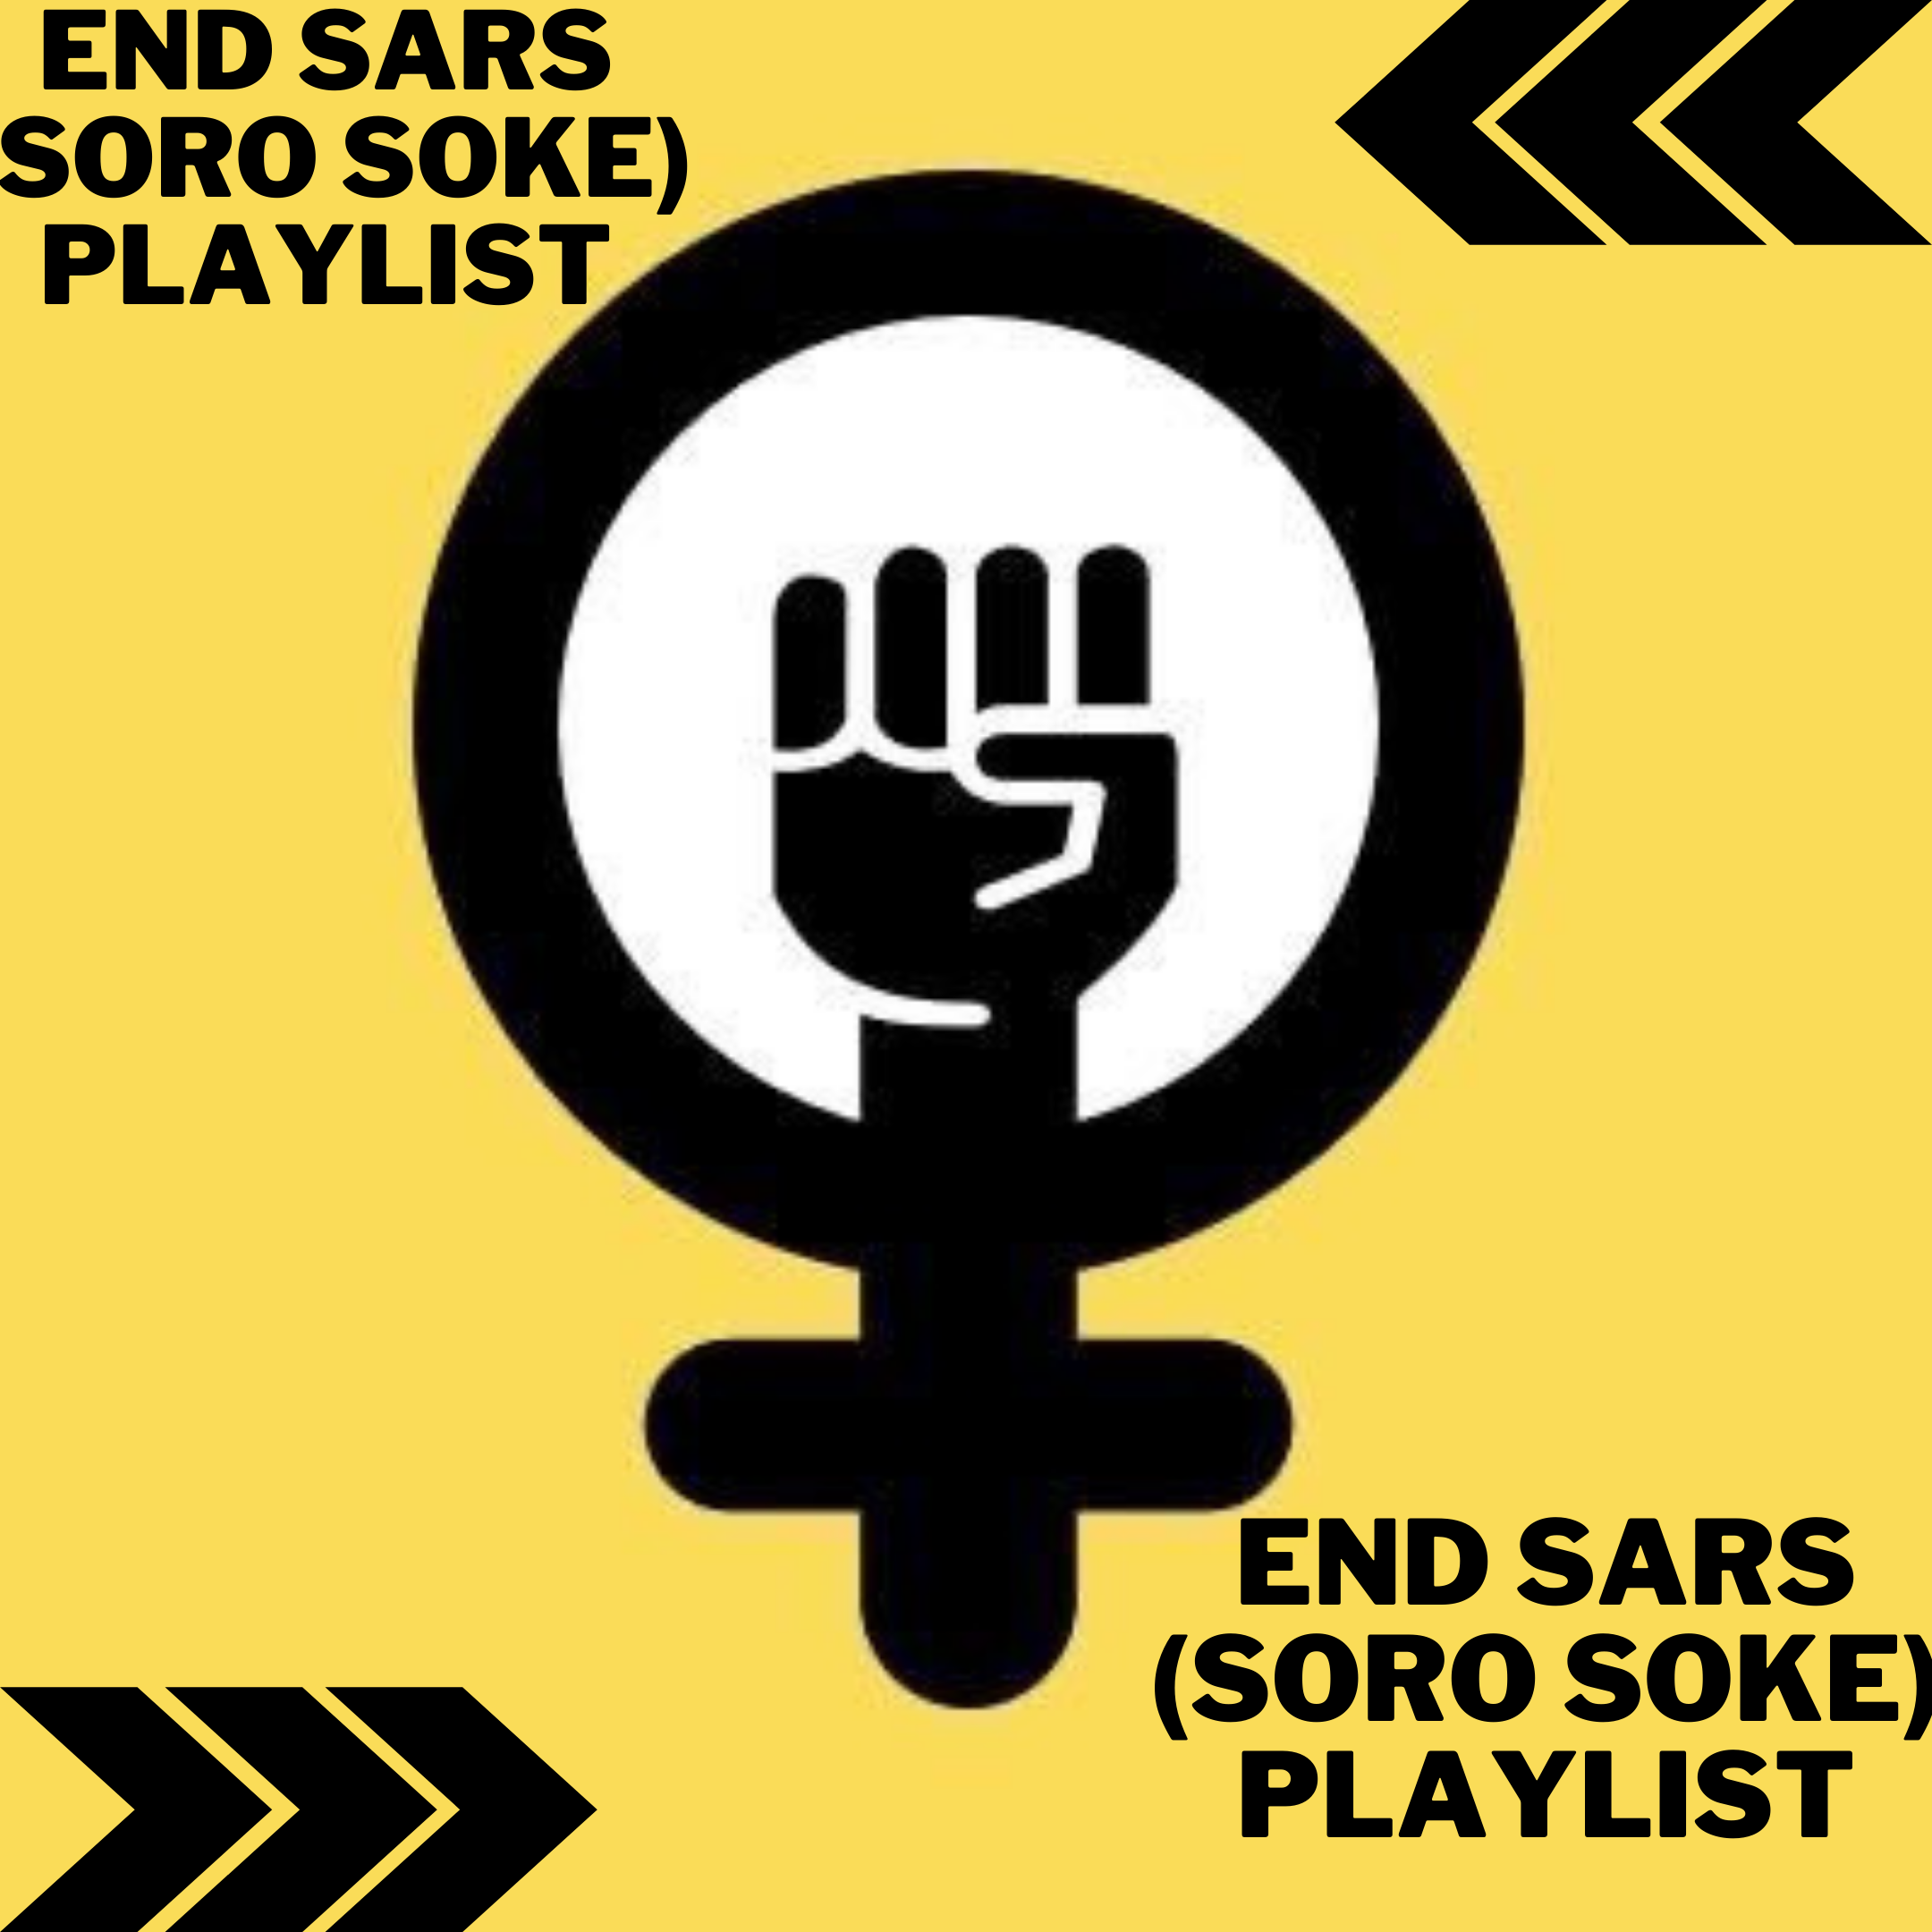 #ENDSARS (Soro Soke) Playlist